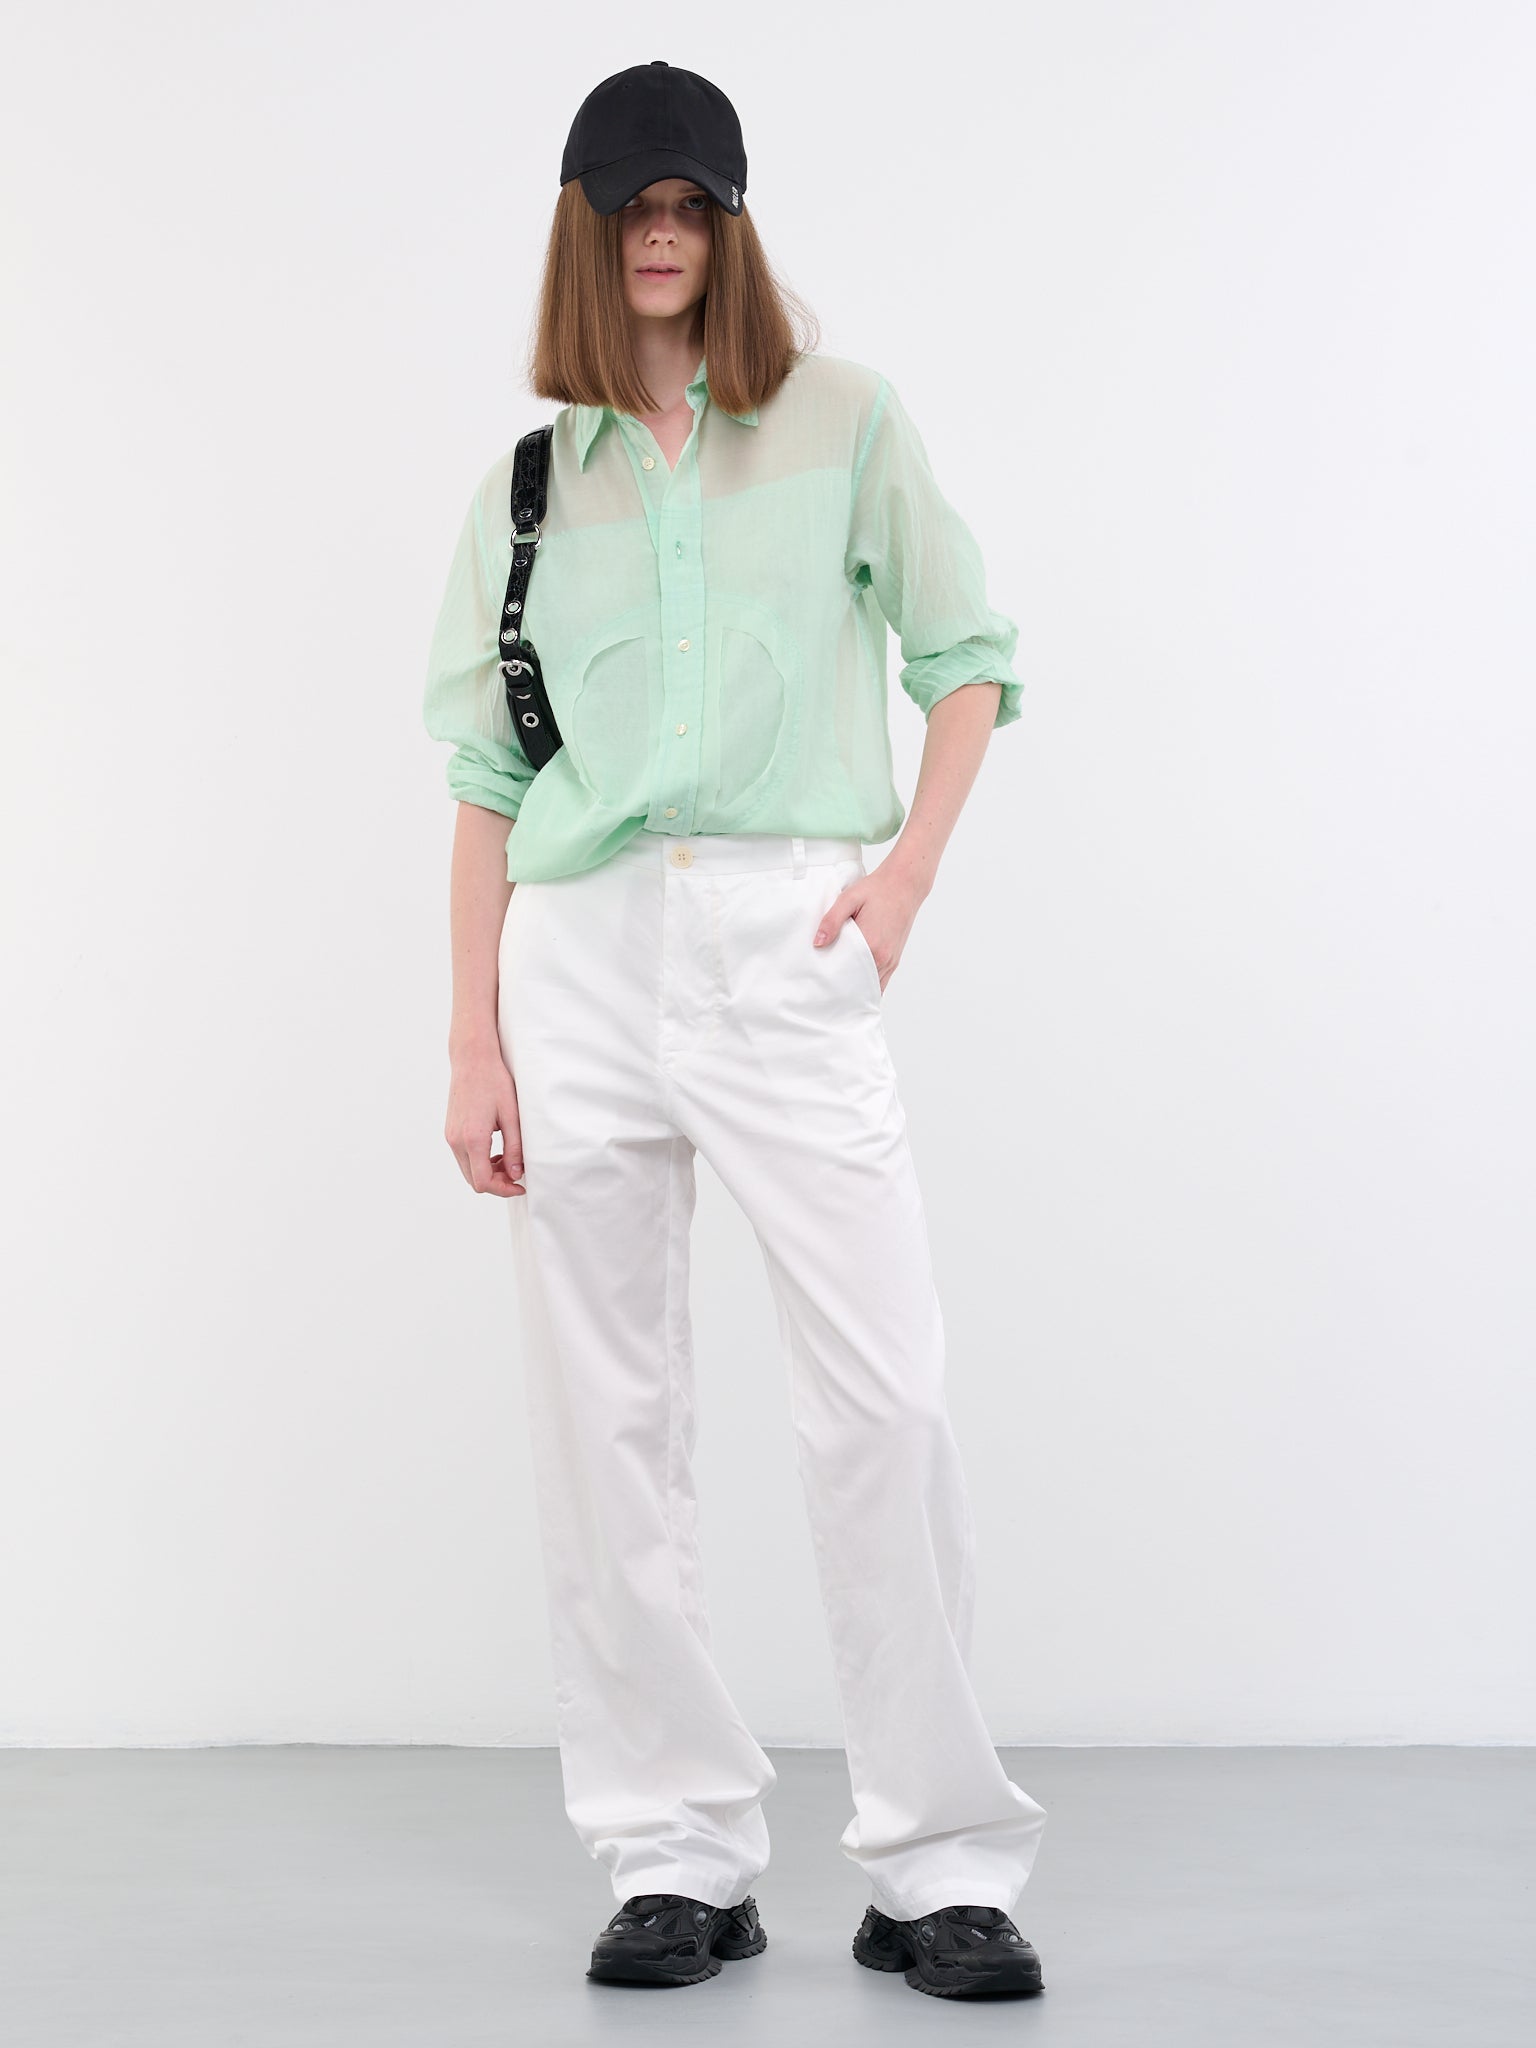 Cotton Trousers (P02A-WHITE)